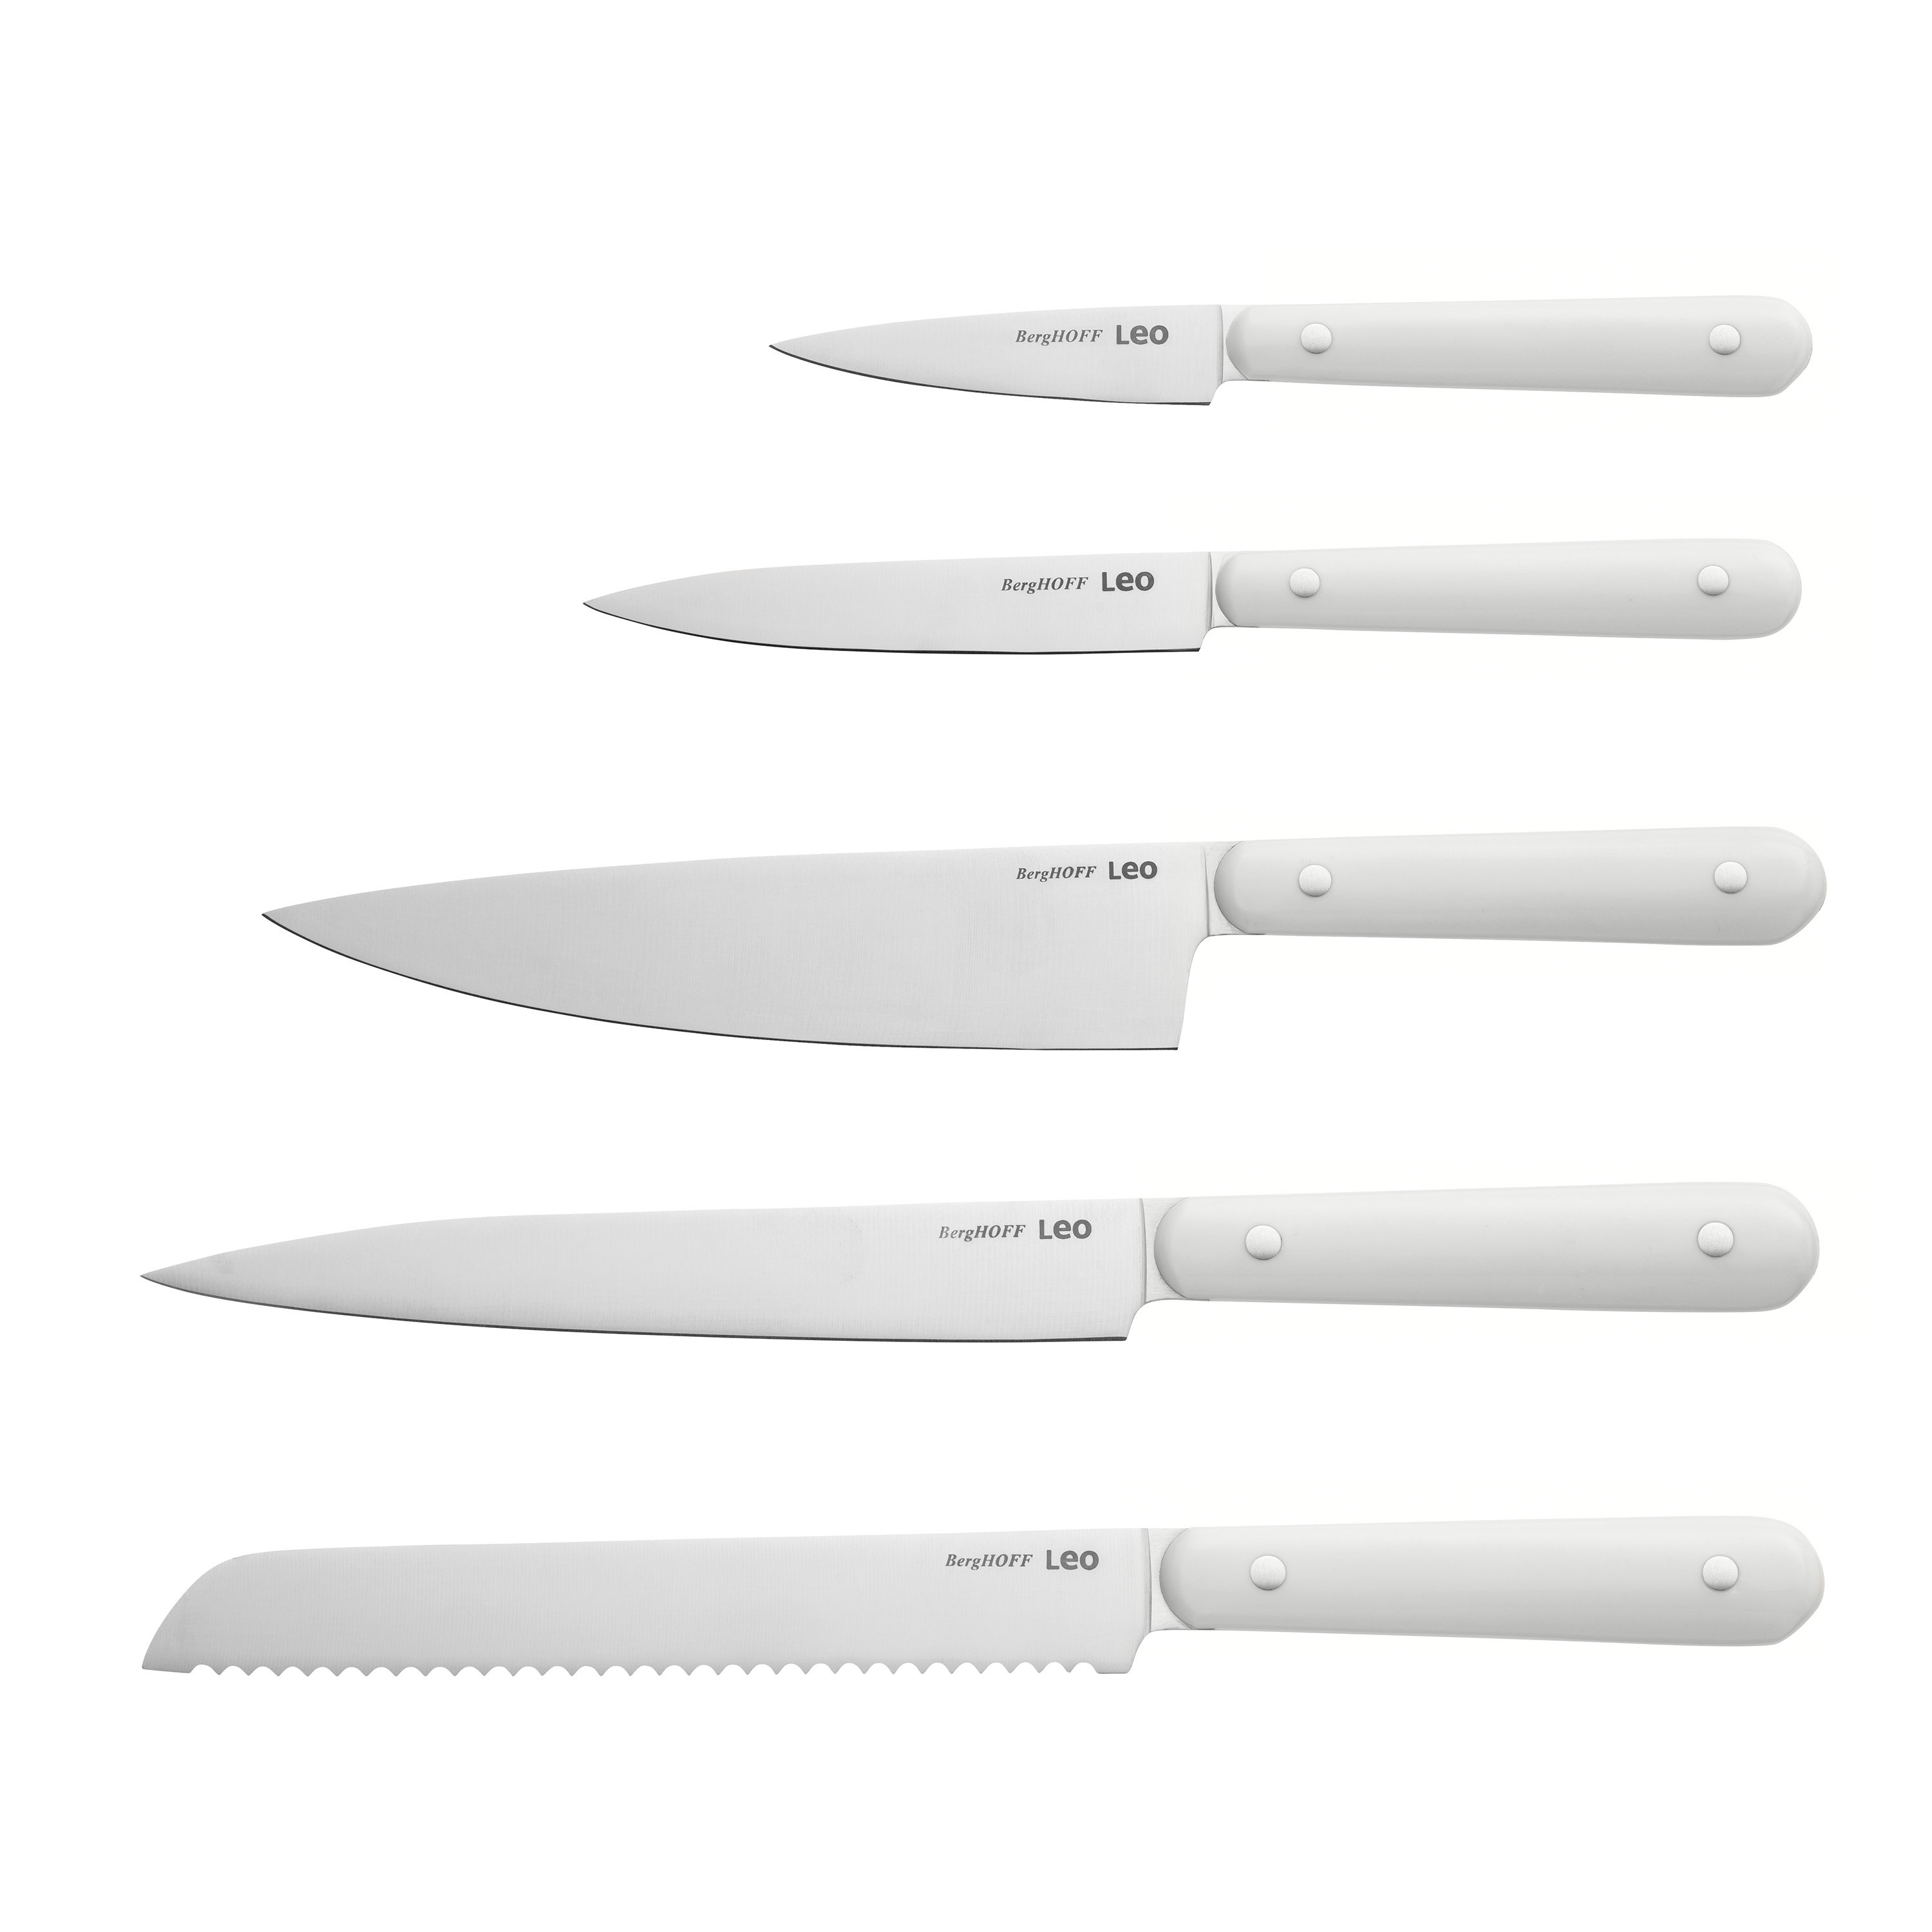 BergHOFF Ron 4pc Knife Set Black, 4 Knives